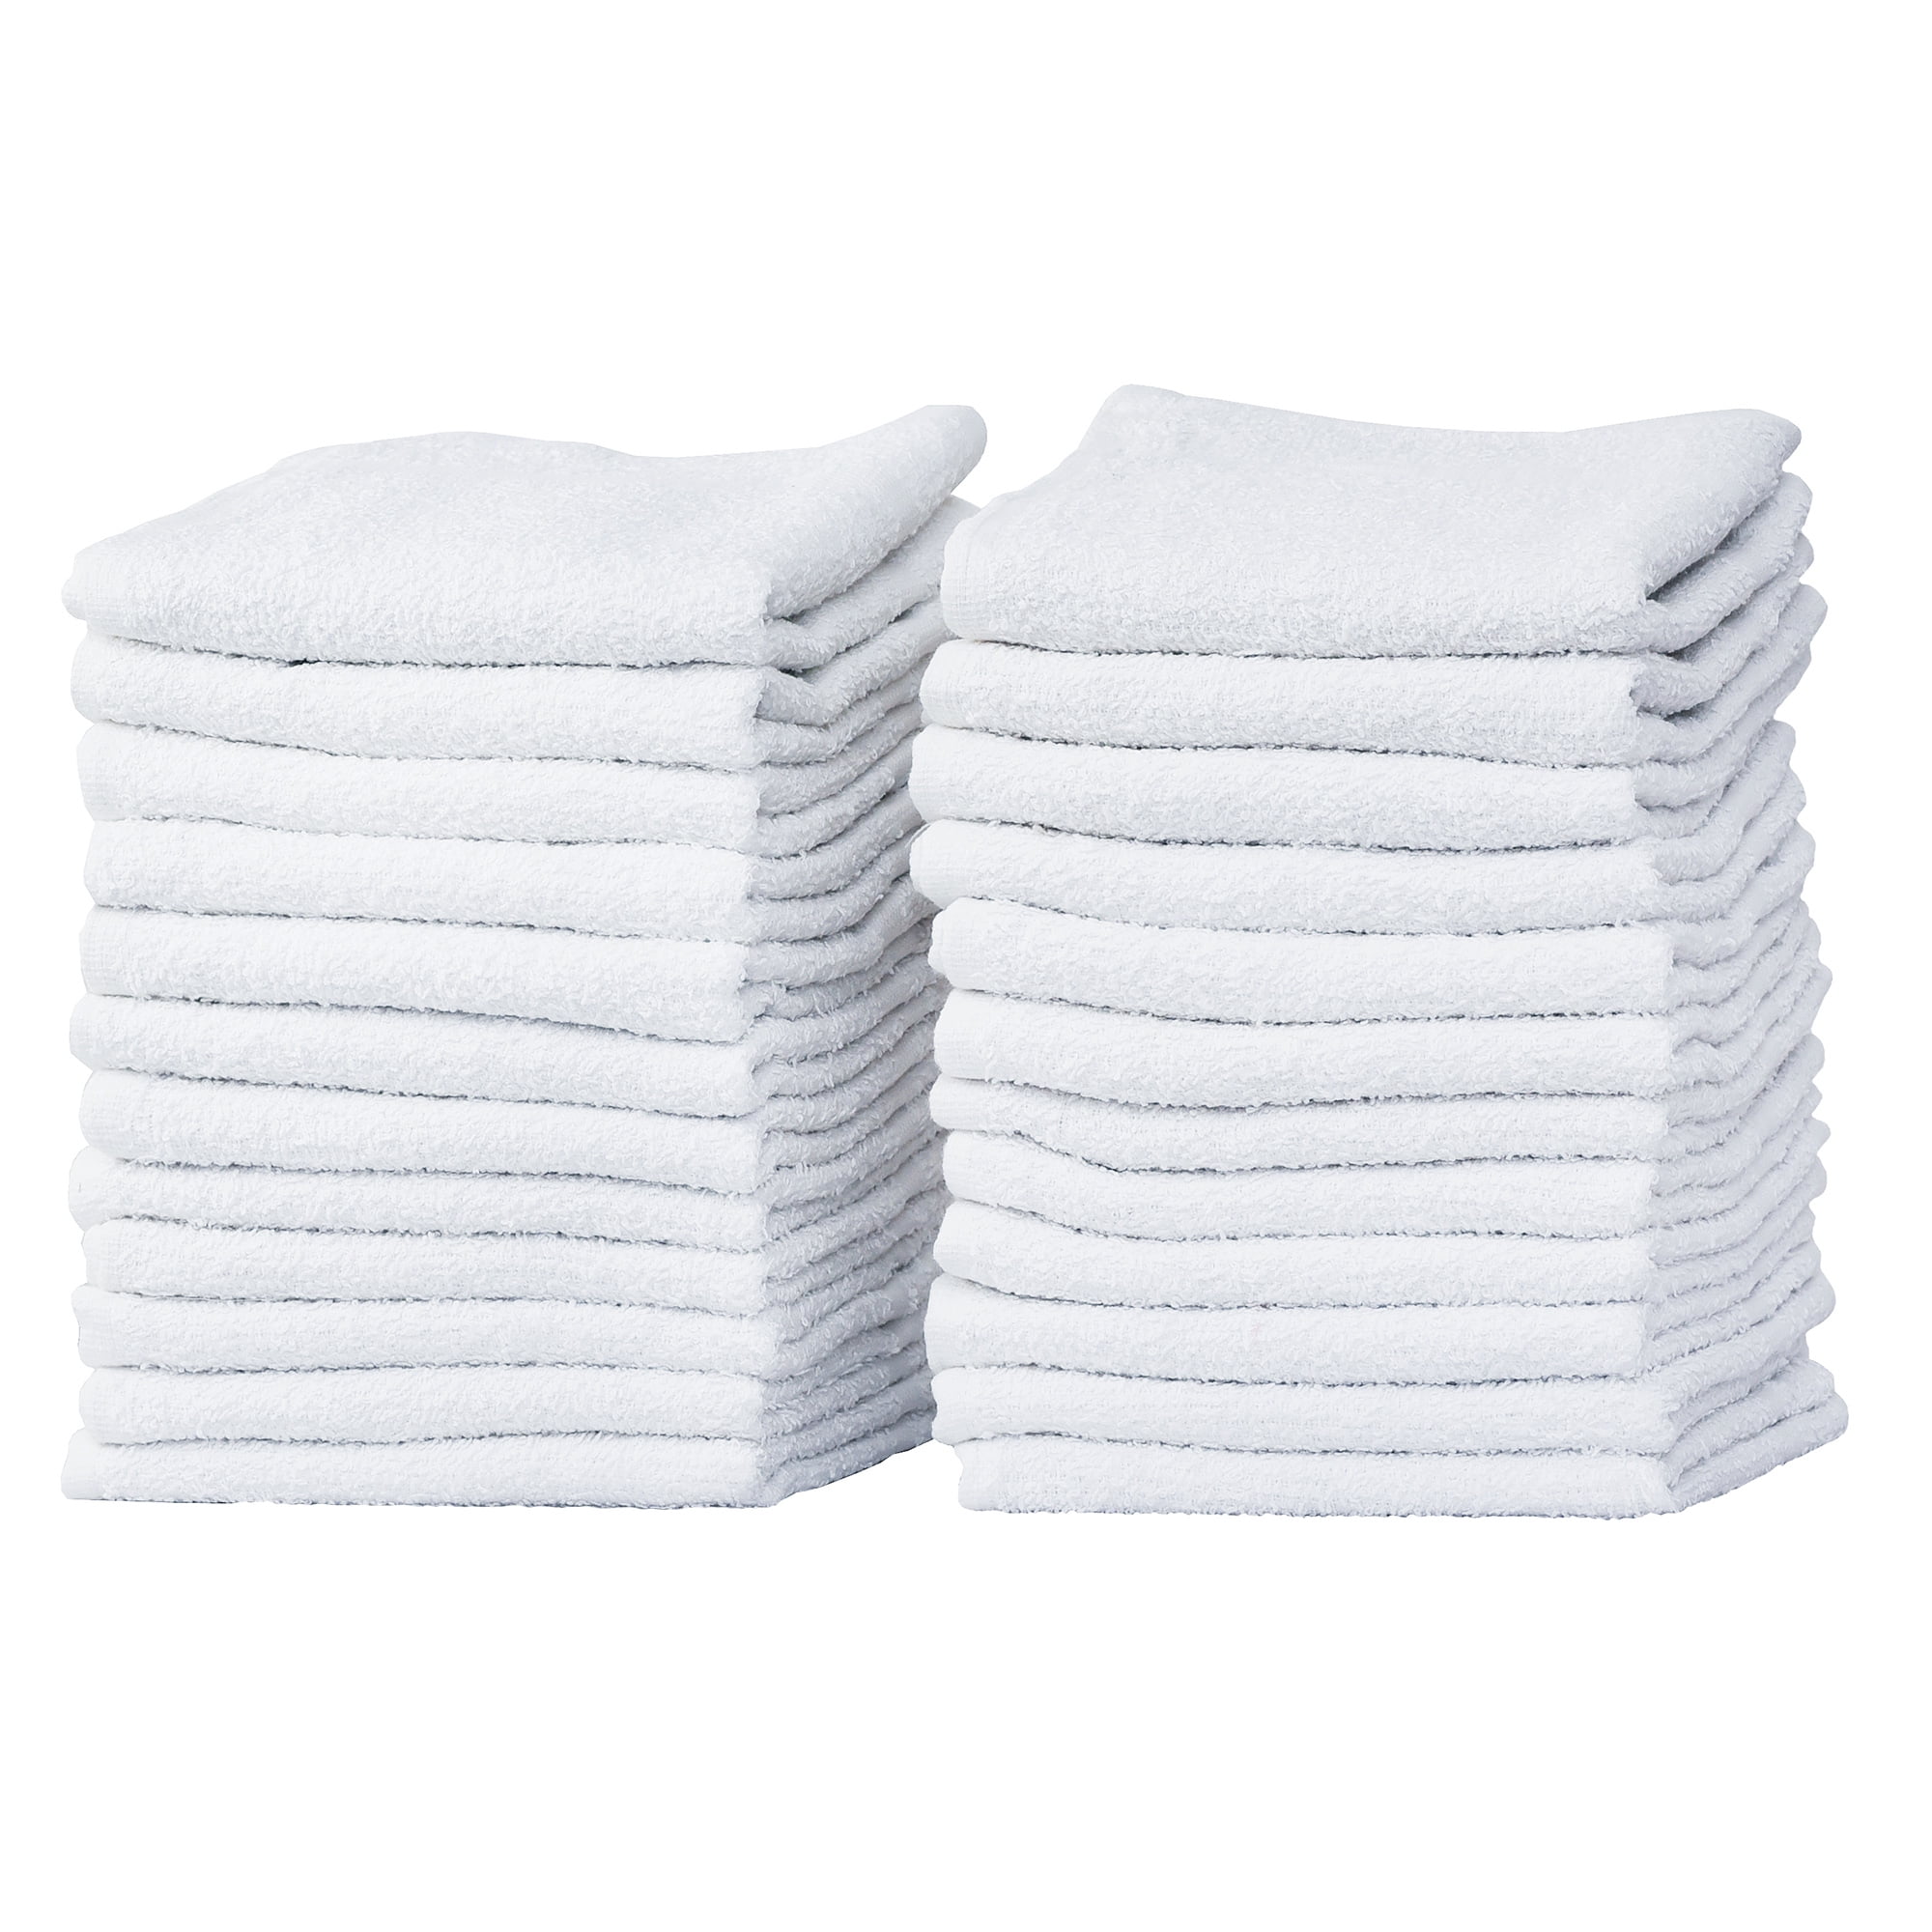 72 new white 100% cotton econ hotel wash cloths 12x12 washcloths 1# heavy duty 